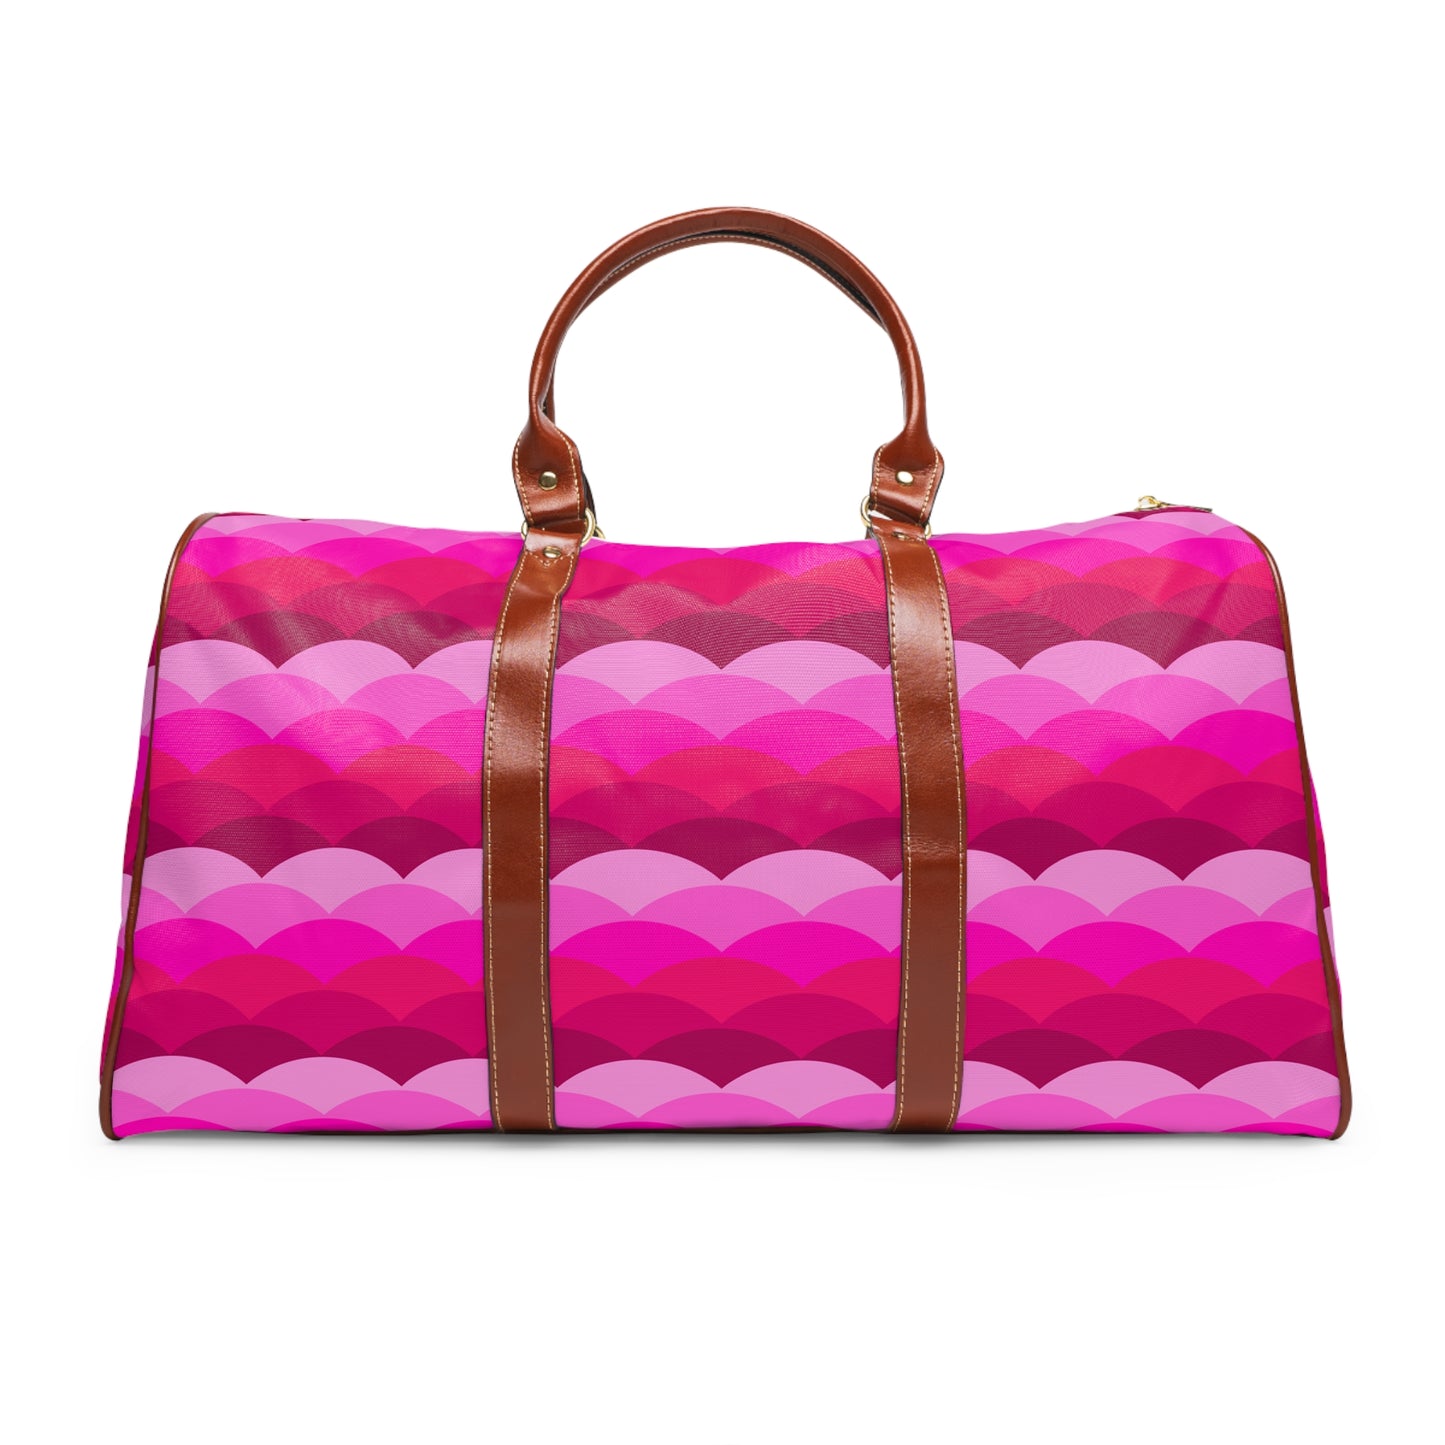 Variations on a Pink Rose - Waterproof Travel Bag